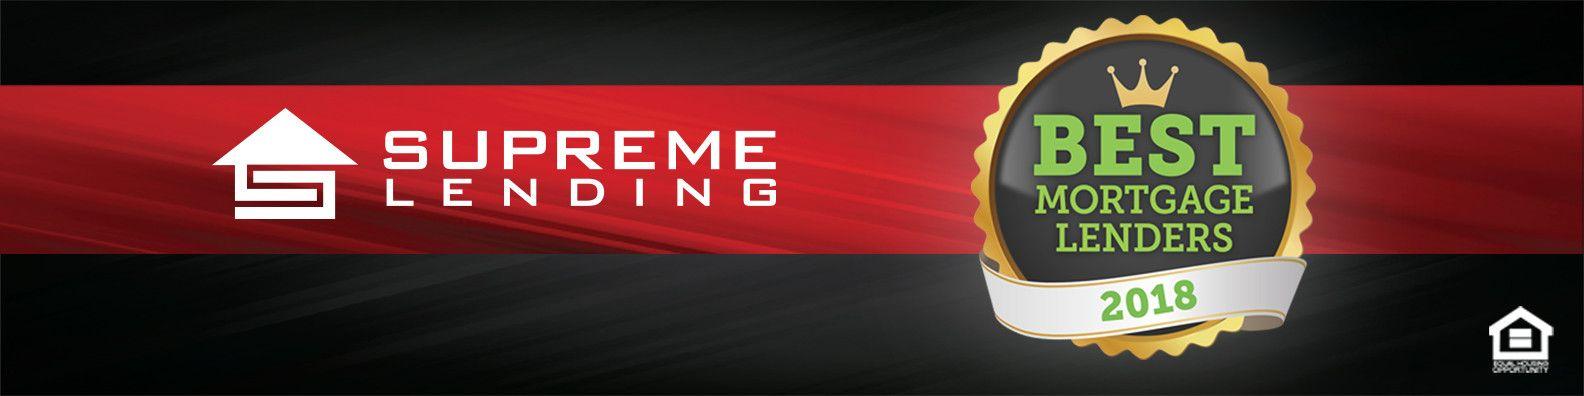 Supreme Lending Logo - Supreme Lending | LinkedIn